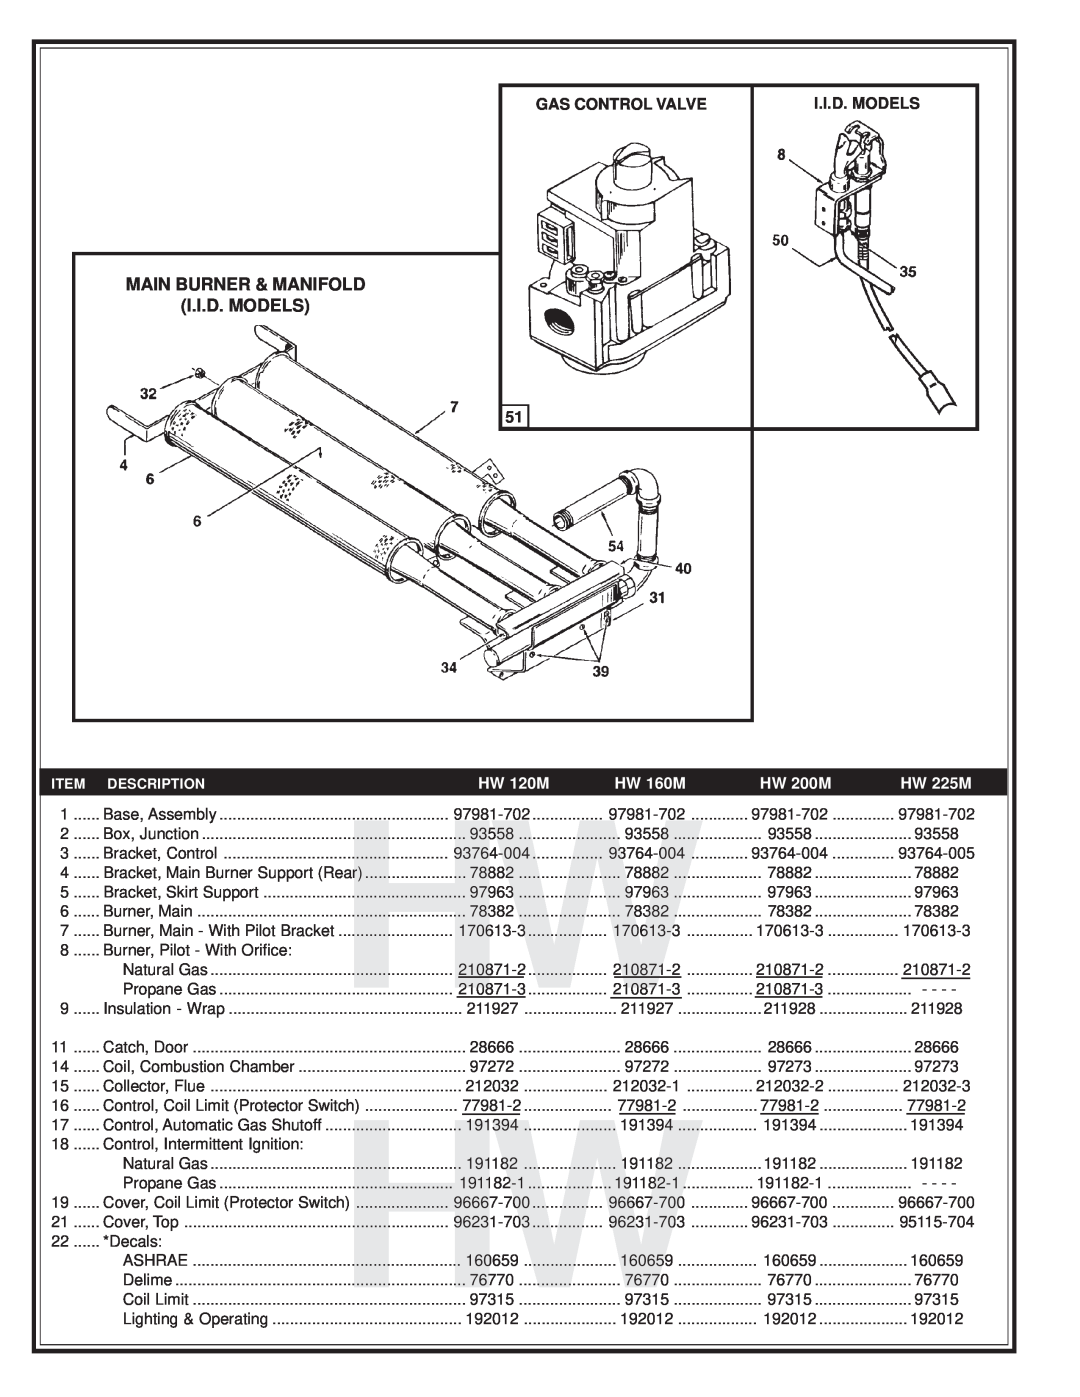 A.O. Smith 105 Series manual Main Burner & Manifold I.I.D. Models, Gas Control Valve, HW 120M, HW 160M, HW 200M, HW 225M 